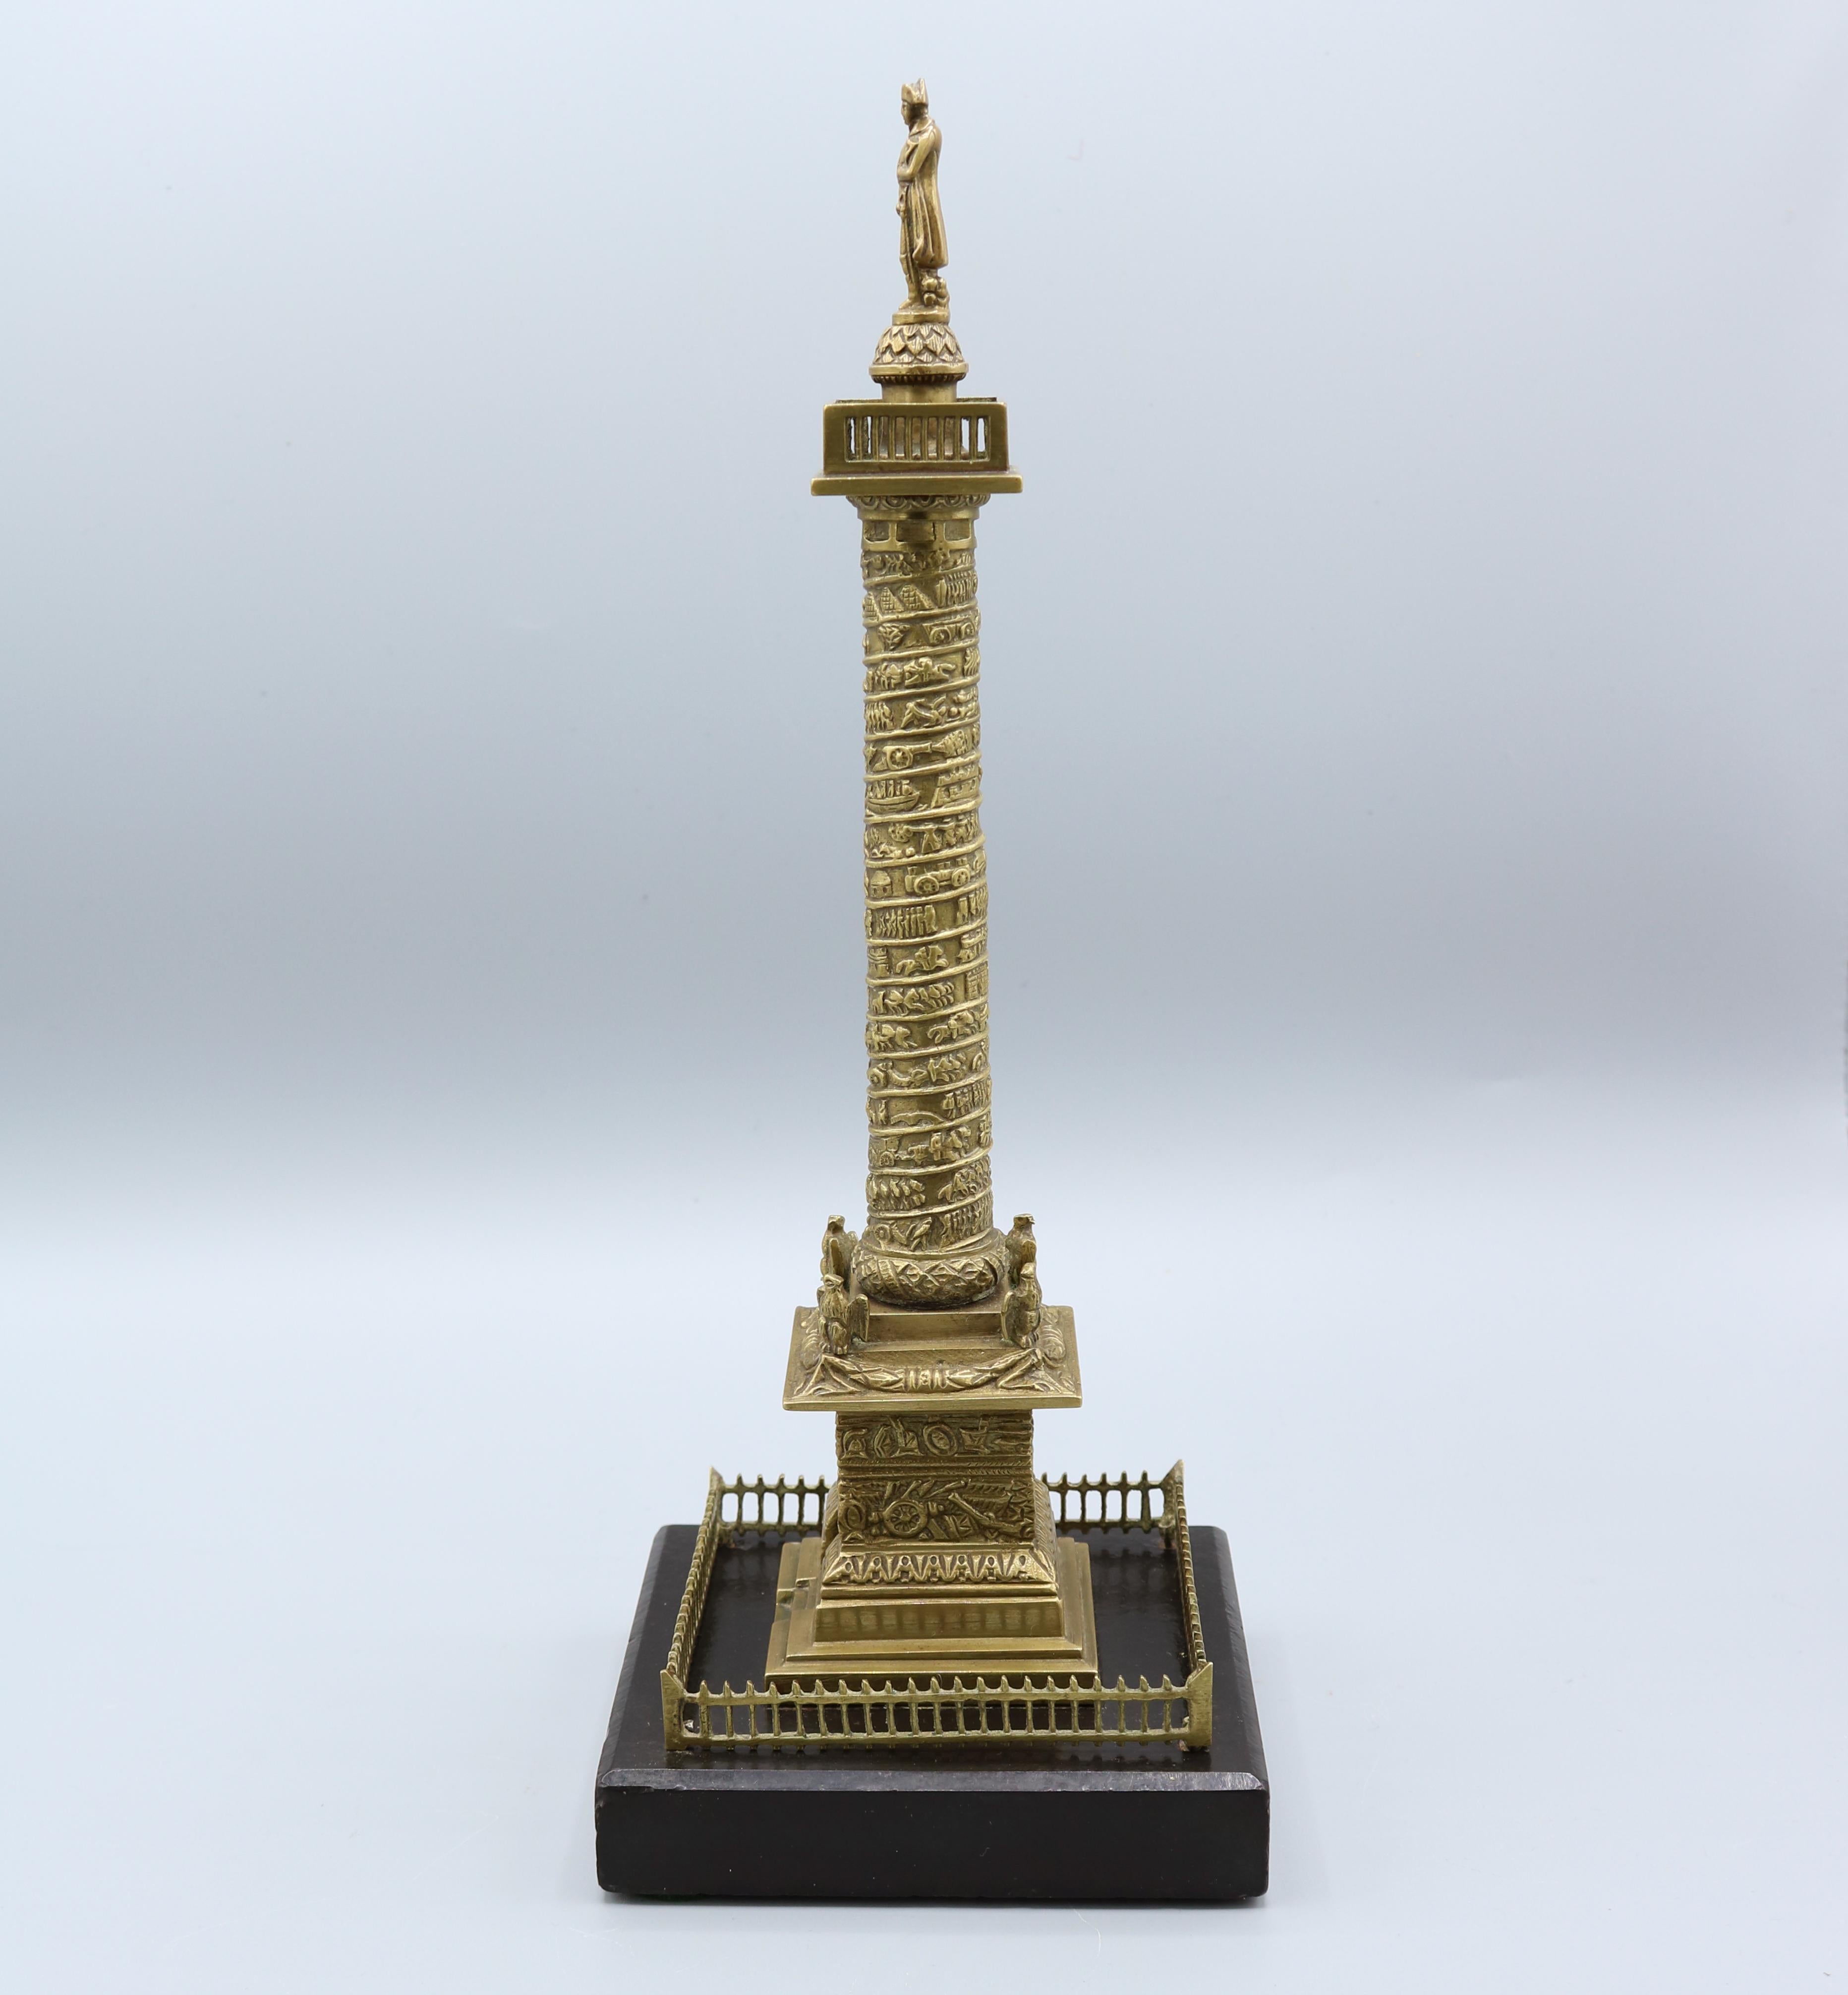 Victorian Model of the Place Vendôme Column, Gilt-Brass, Mid-19th Century